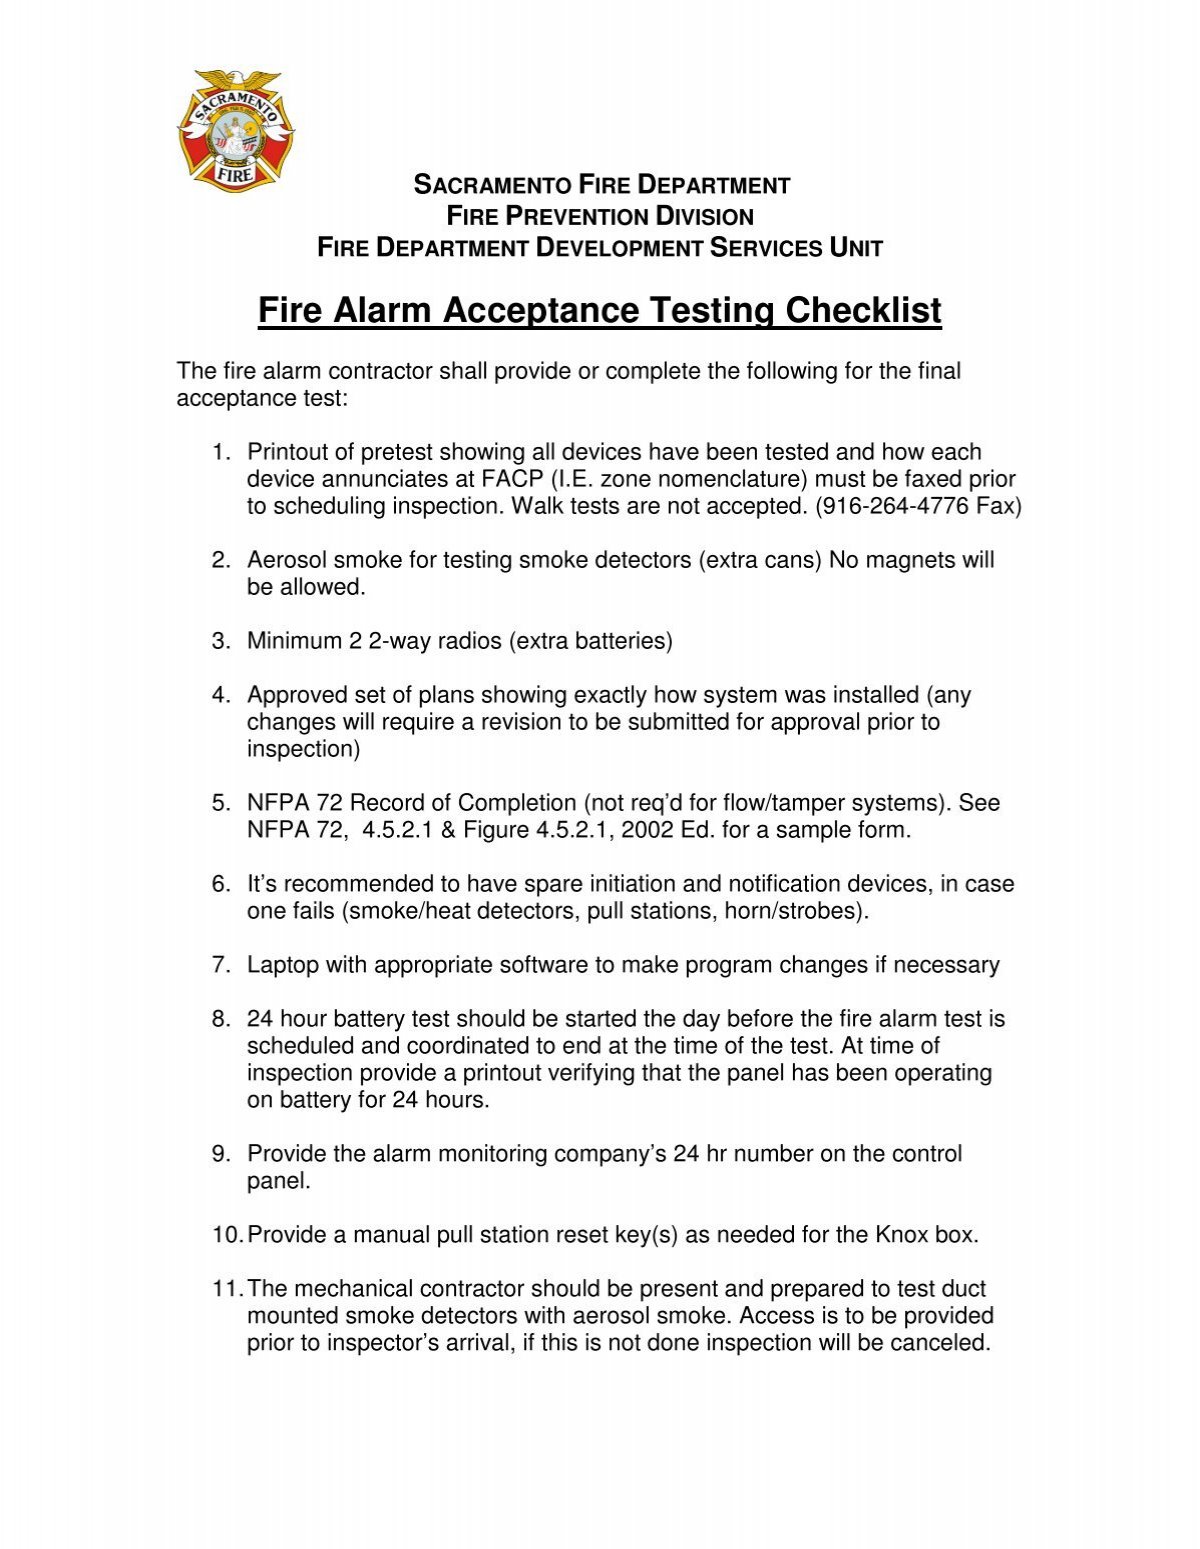 fire-alarm-acceptance-testing-checklist-sacramento-fire